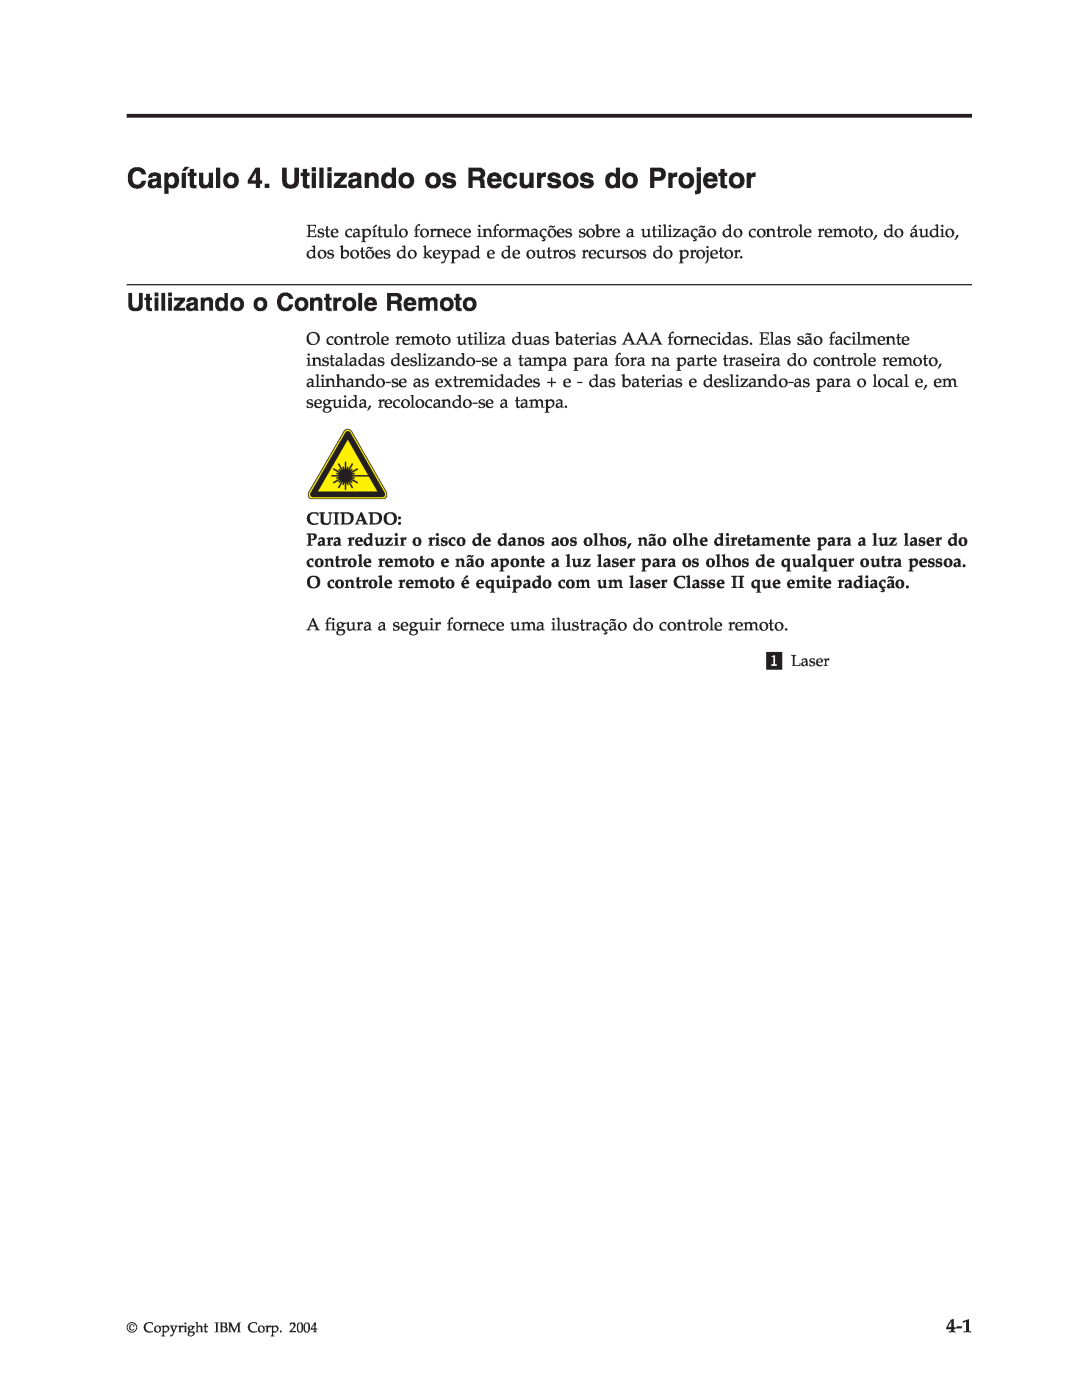 IBM M400 manual Capítulo 4. Utilizando os Recursos do Projetor, Utilizando o Controle Remoto, Cuidado 